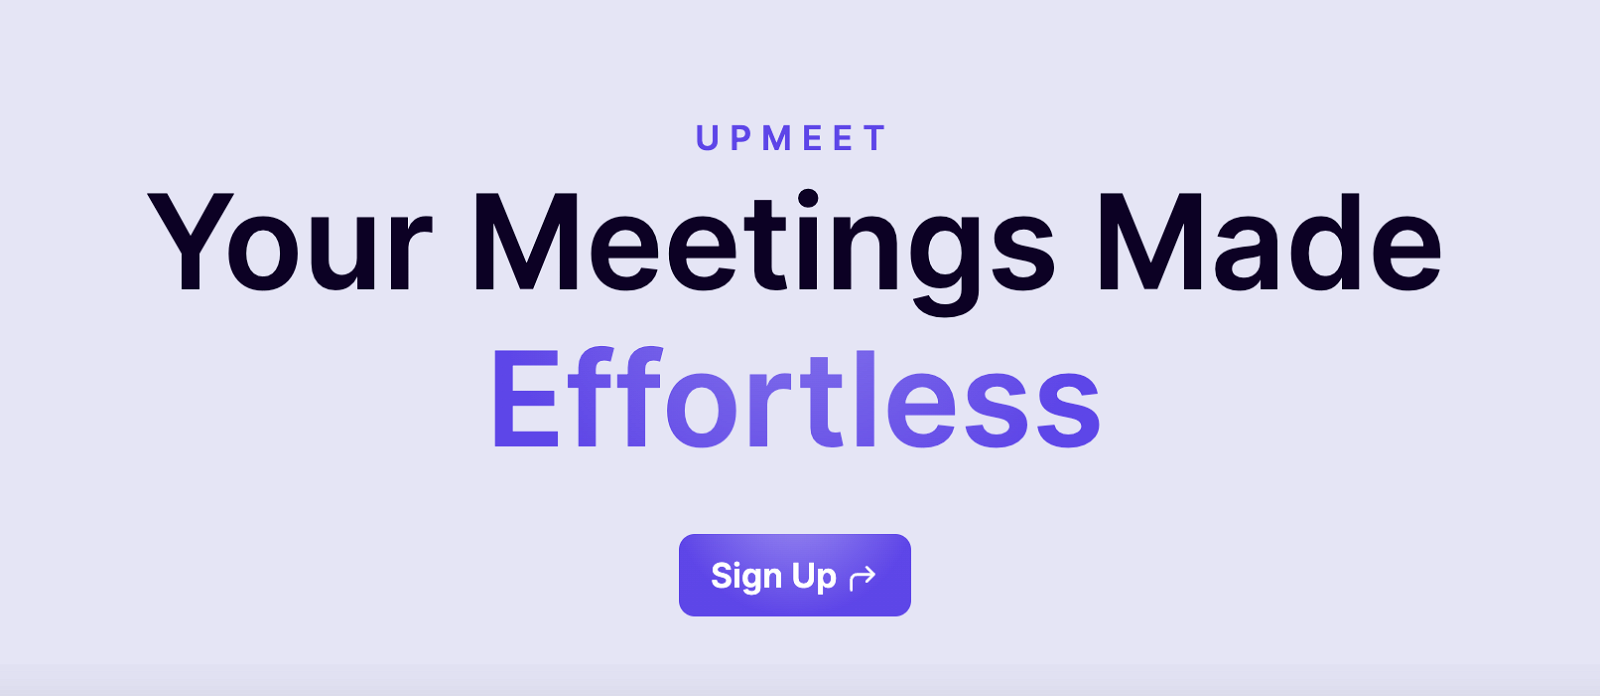 25% off upmeet.me video meeting software